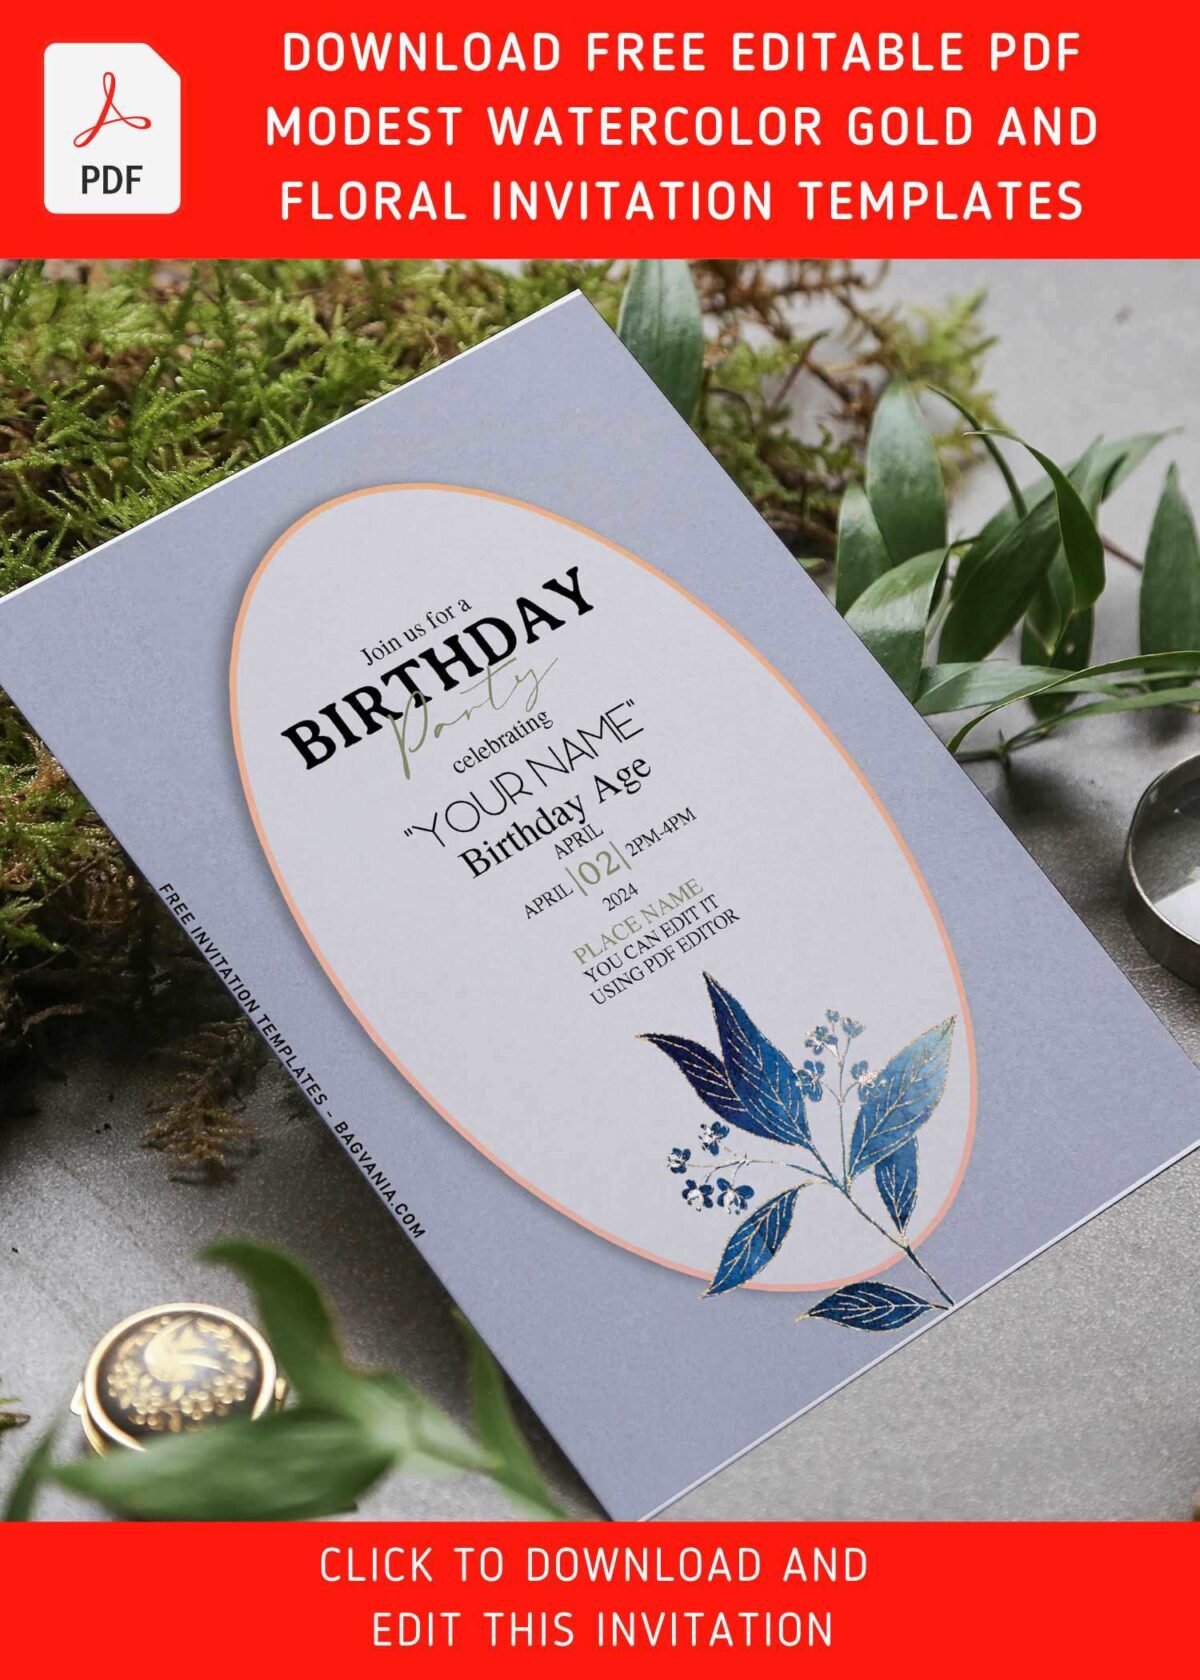 (Free Editable PDF) Simply Gorgeous Blue Foliage Invitation Templates with 